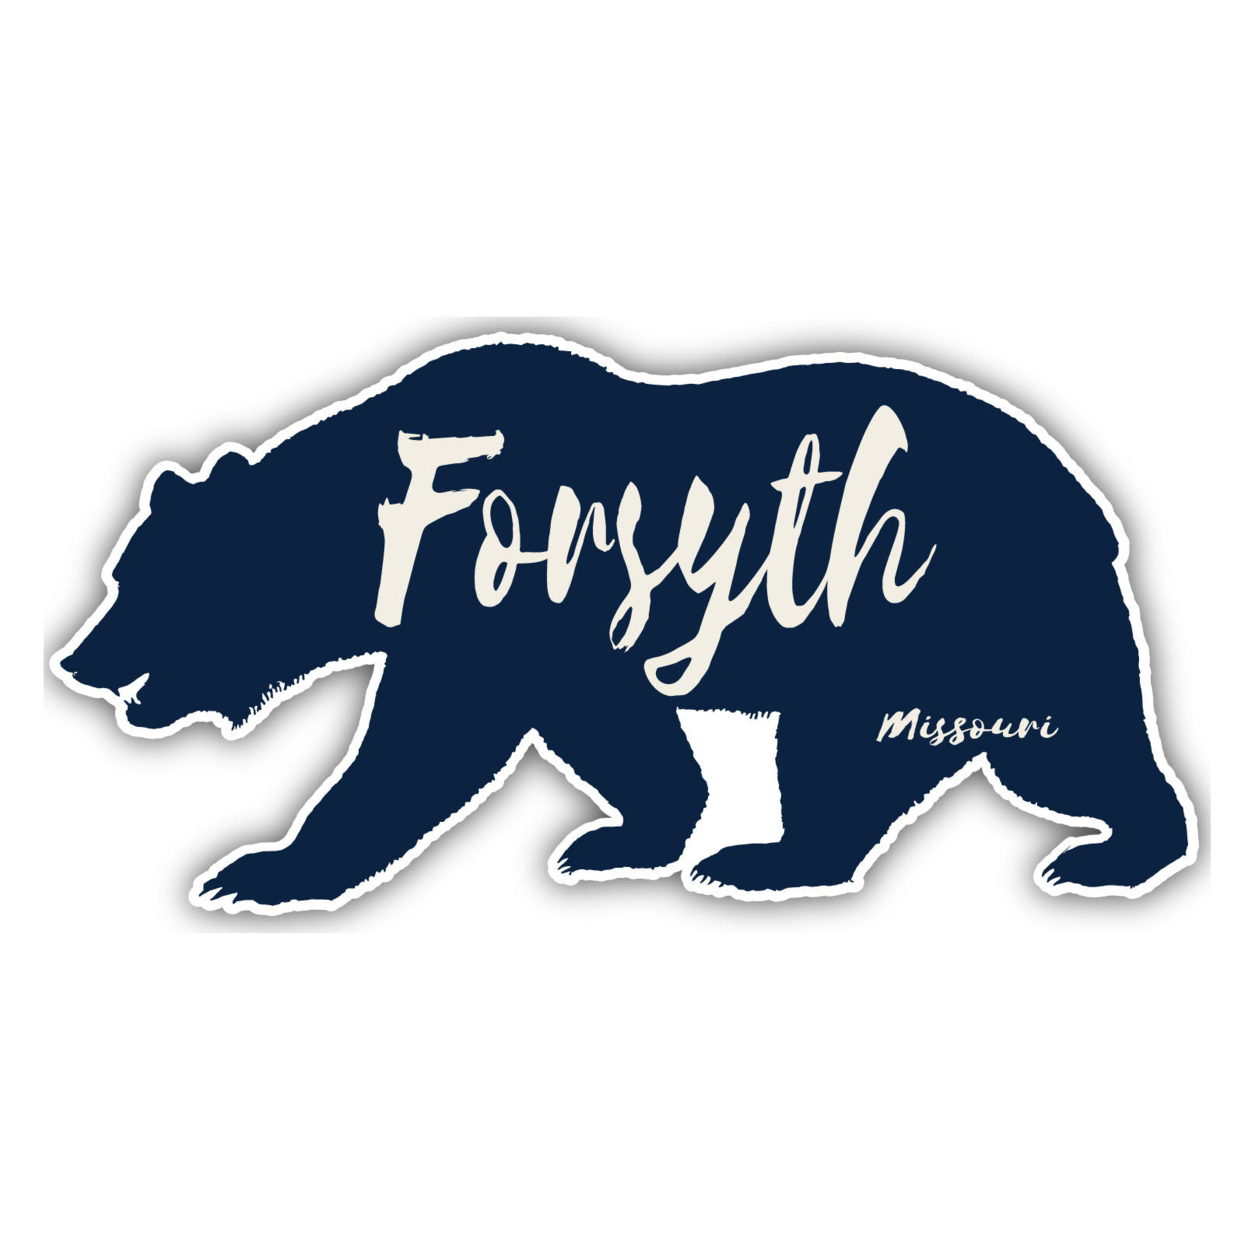 Forsyth Missouri Souvenir Decorative Stickers (Choose Theme And Size) - 4-Pack, 10-Inch, Bear